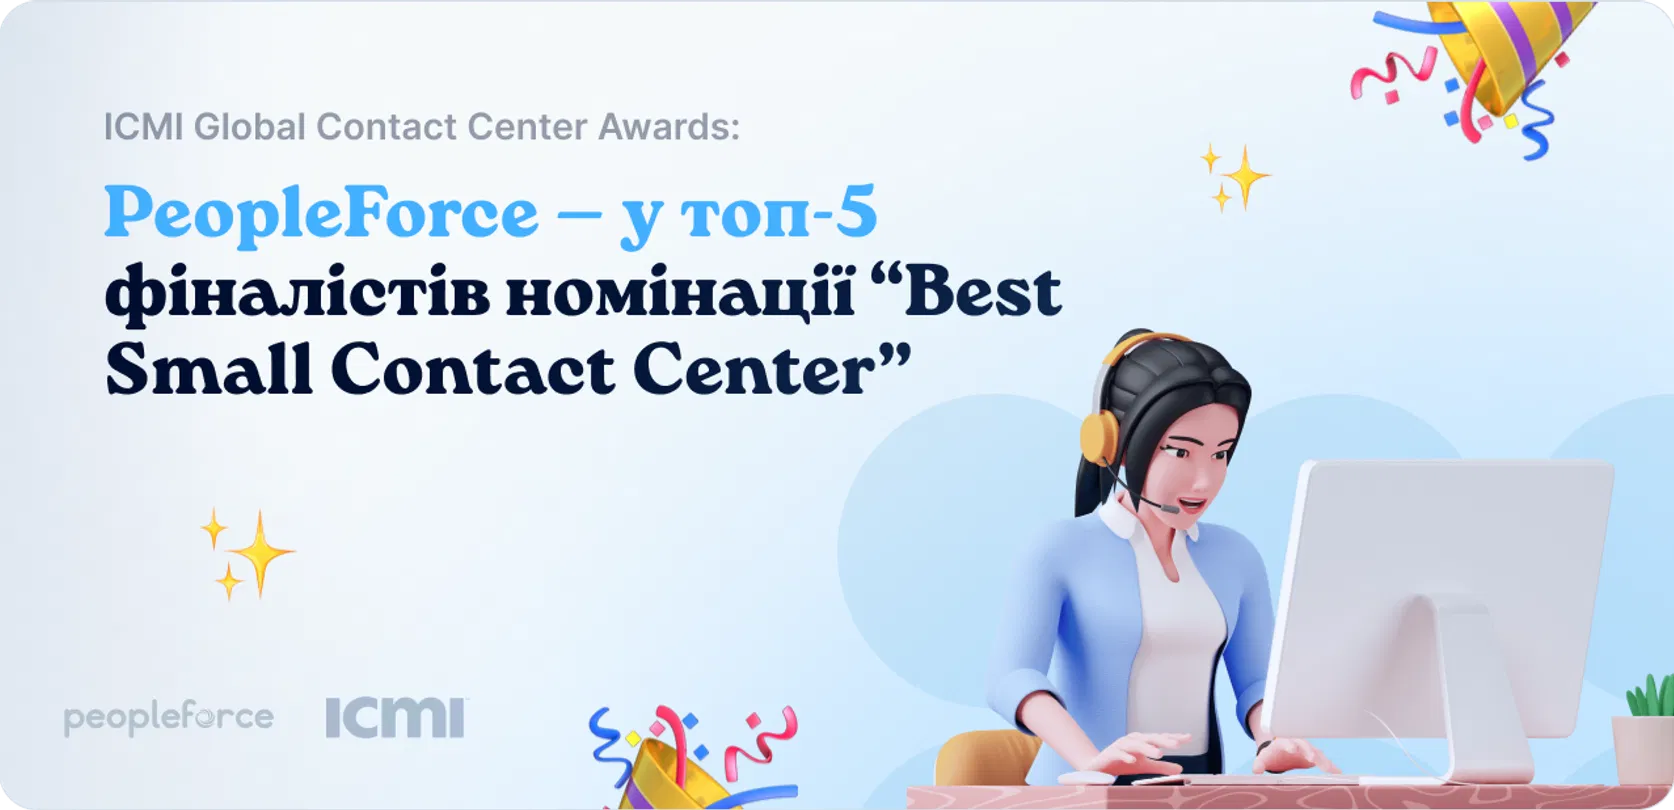 ICMI Global Contact Center Awards: PeopleForce — у топ-5 фіналістів номінації “Best Small Contact Center”